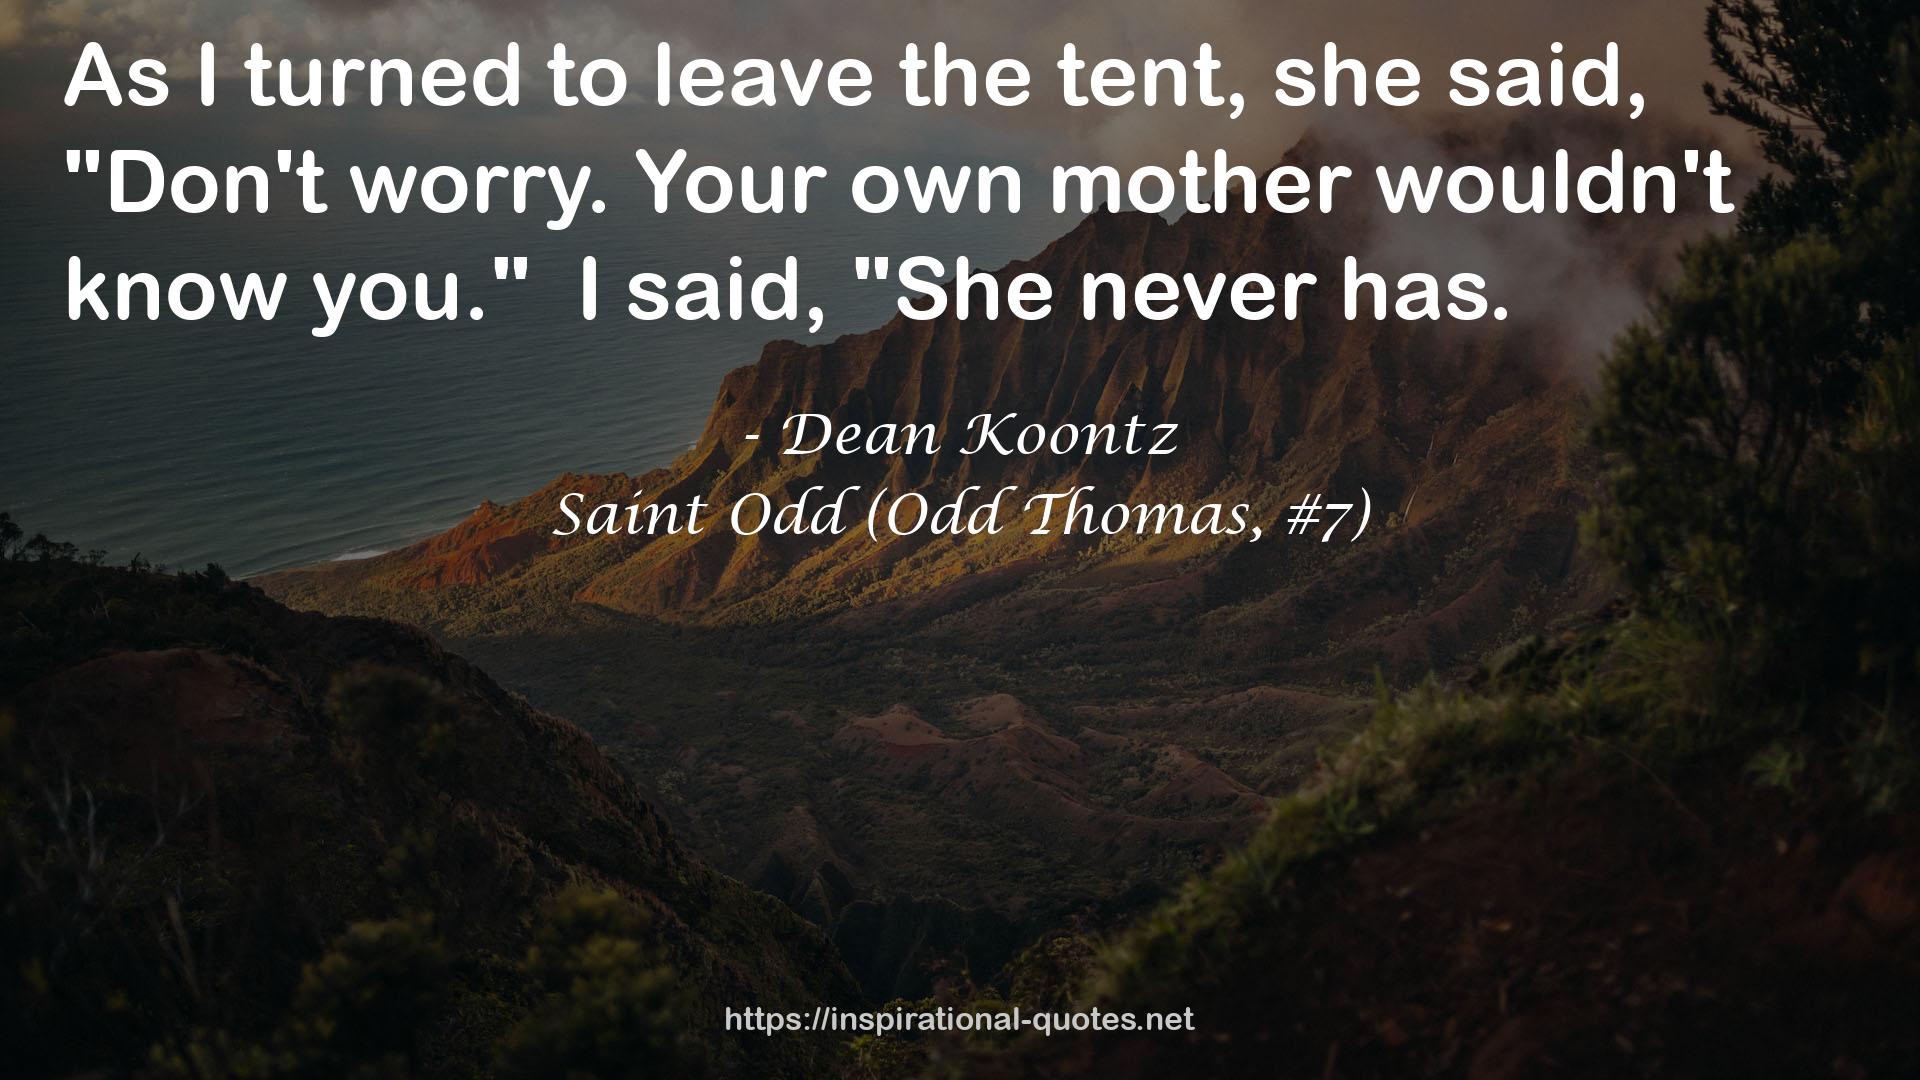 Saint Odd (Odd Thomas, #7) QUOTES